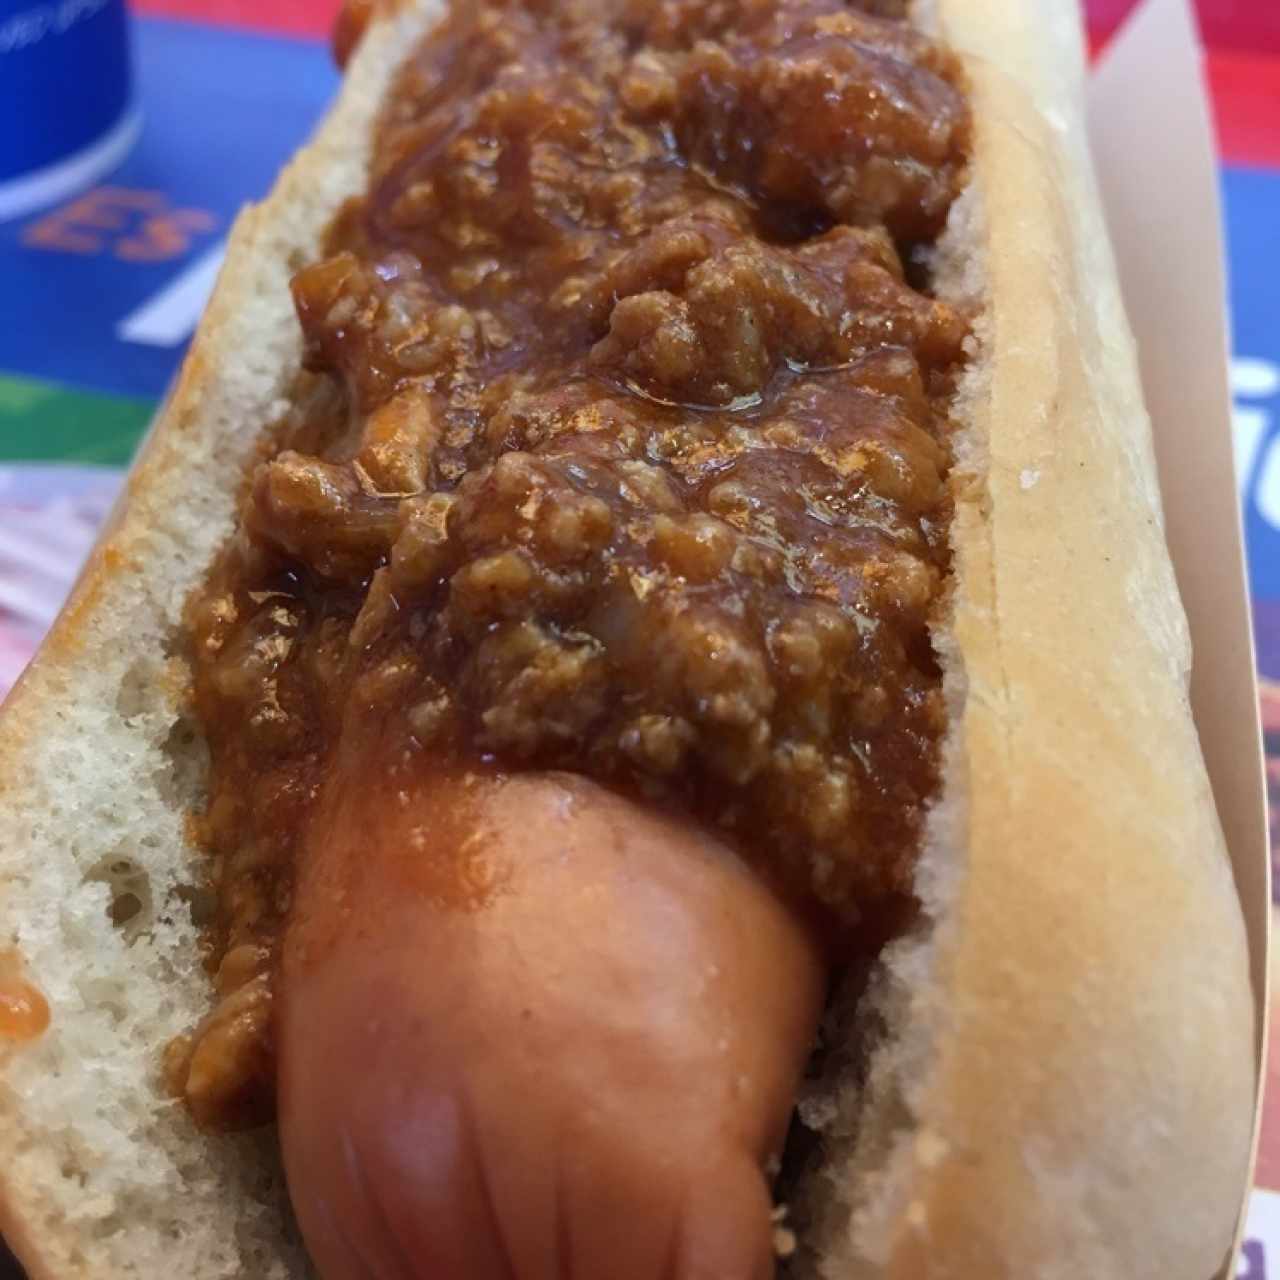 chili hot dog. 